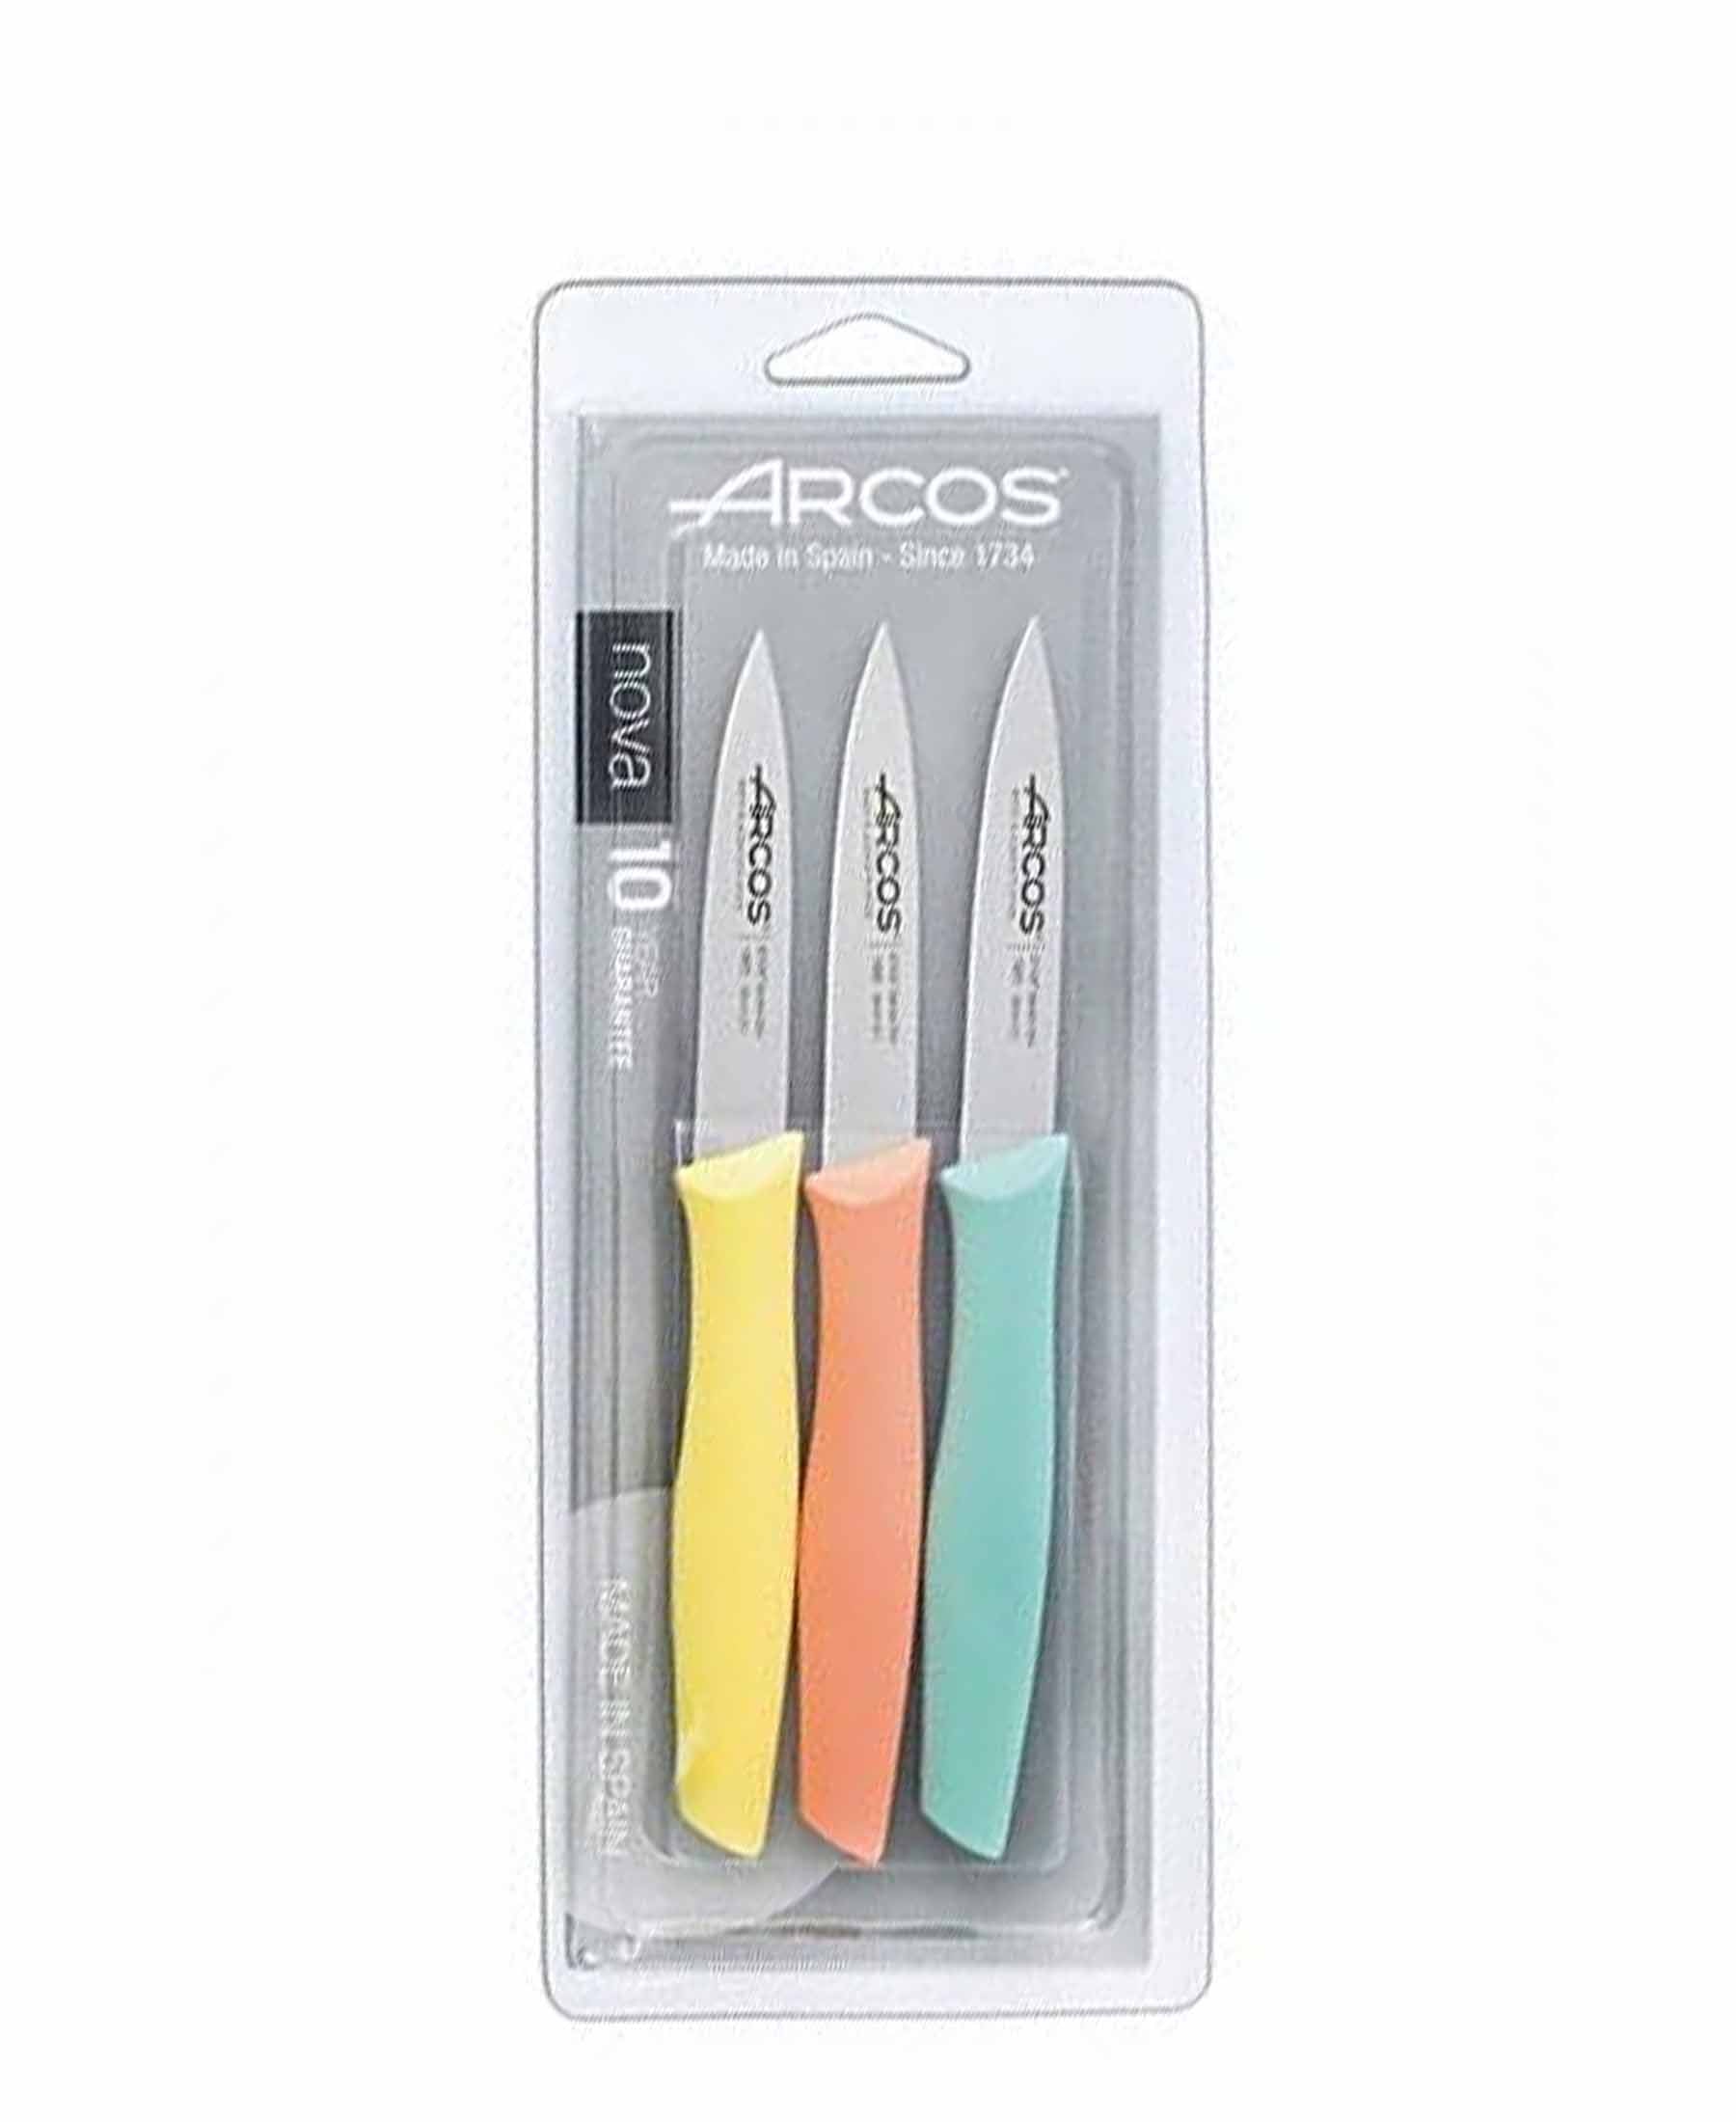 Arcos 3 Piece Nova Pairing Knife Set - Lime, Coral & Mint